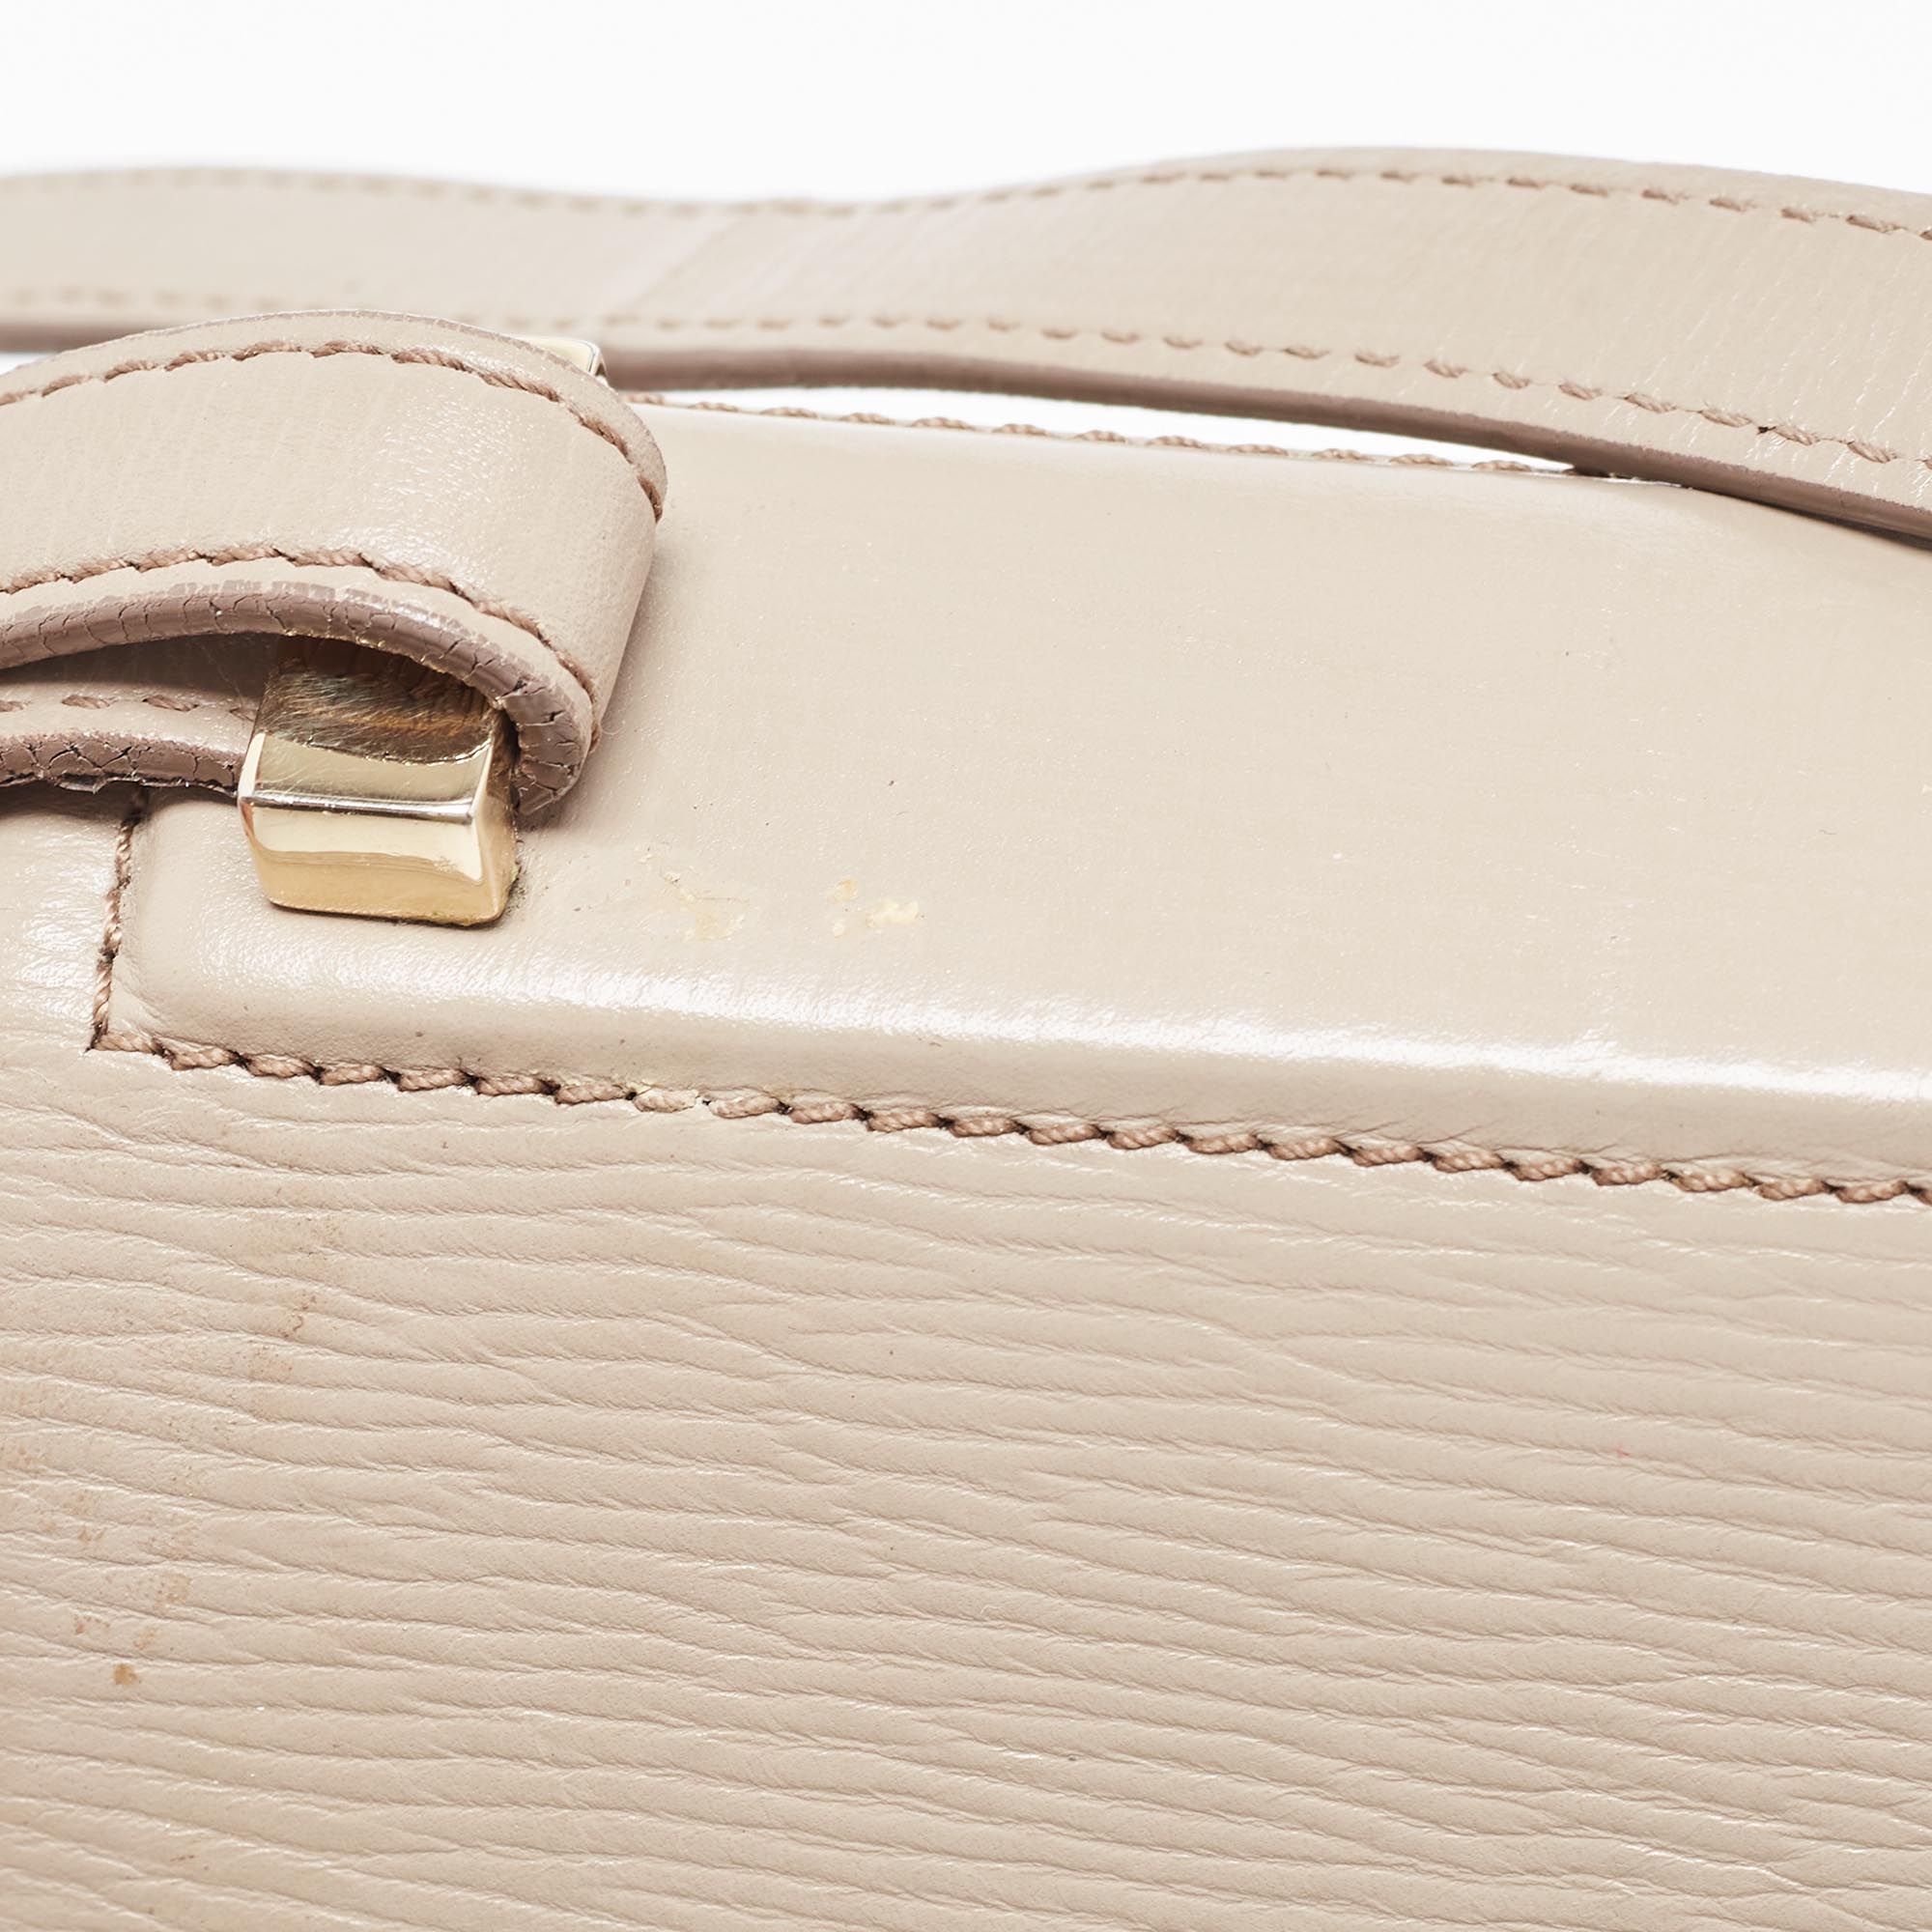 Givenchy Beige Leather Mini Pandora Box Crossbody Bag